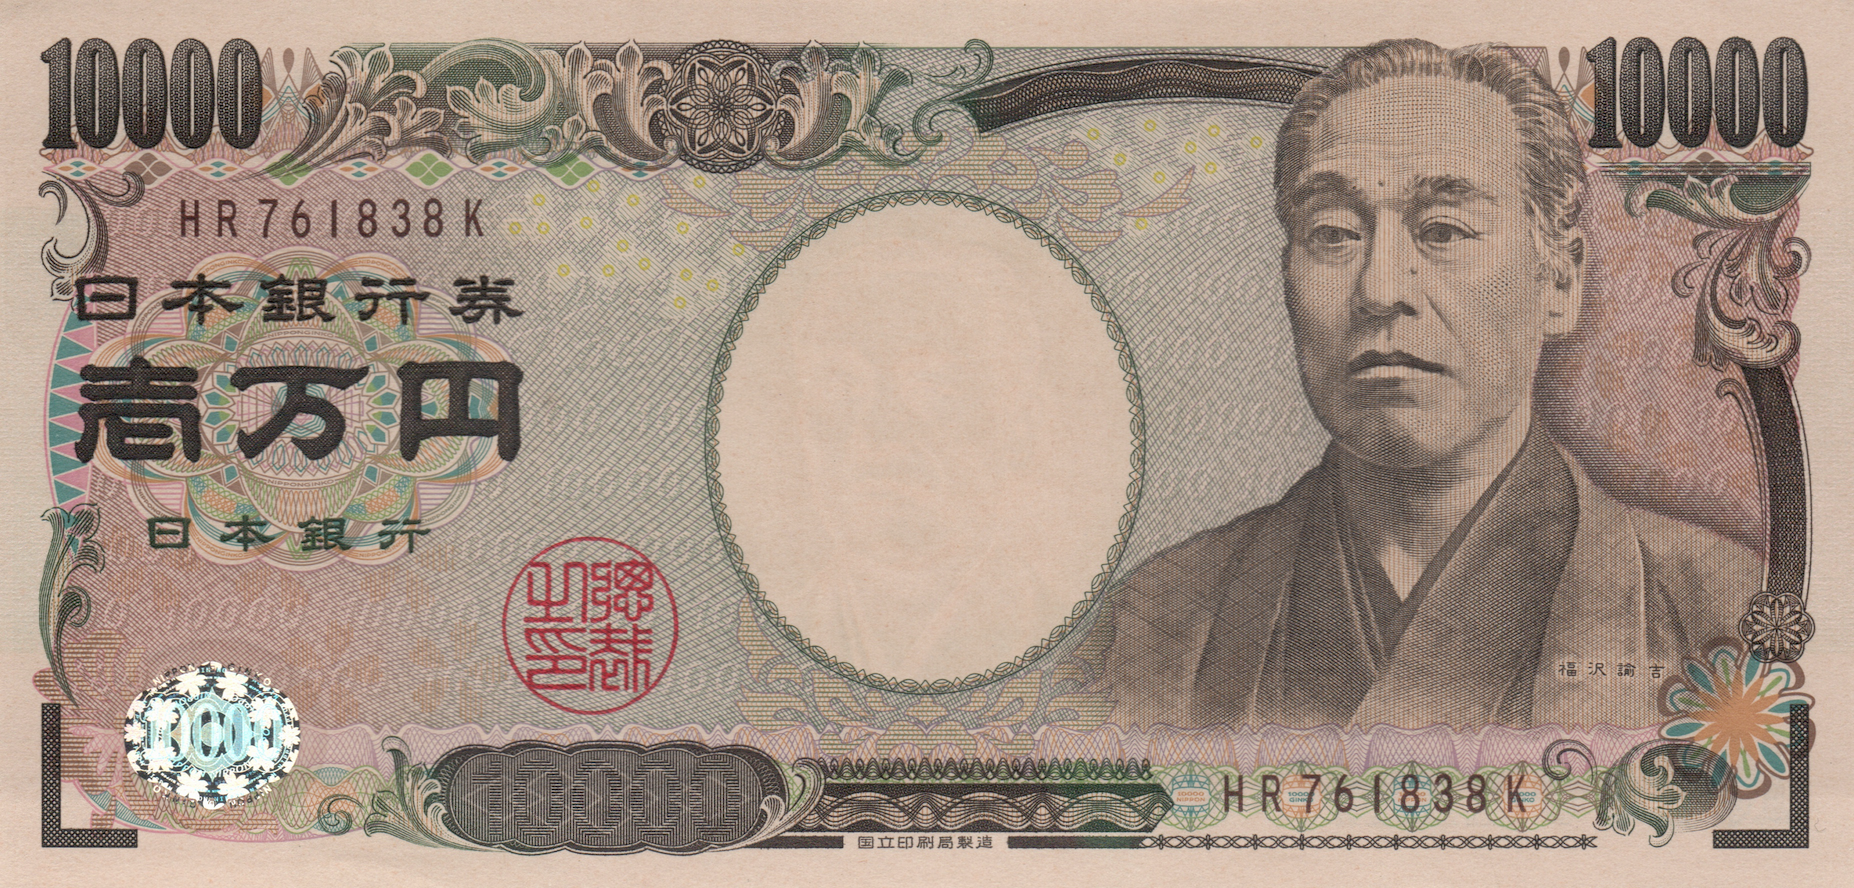 10000 yen to philippine peso